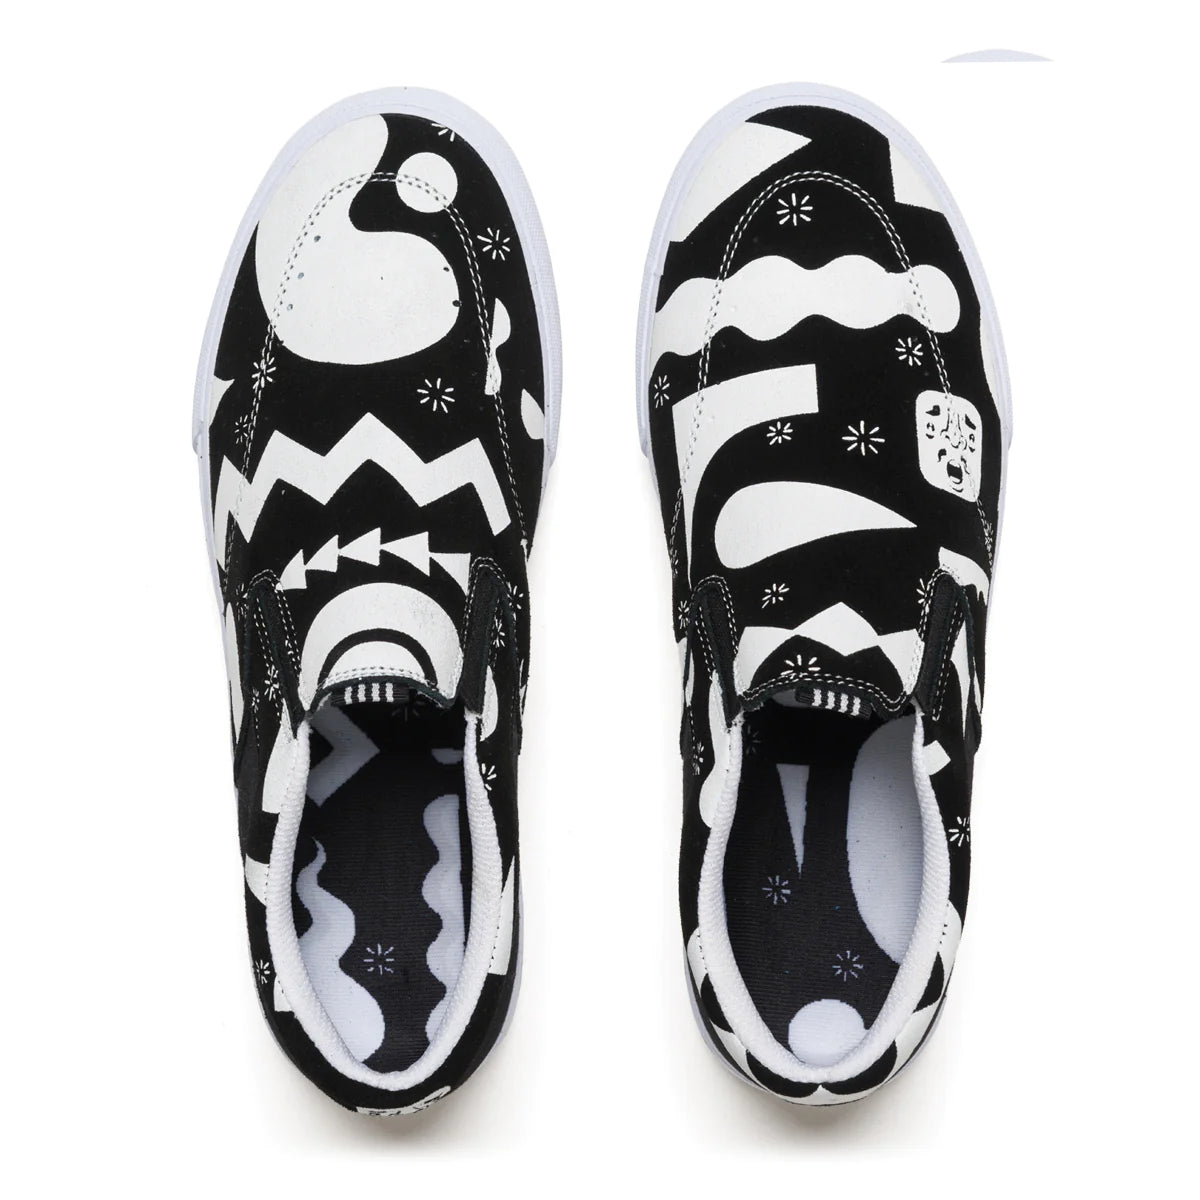 Lakai x Esow Owen VLK Skate Shoes - Black/White Suede